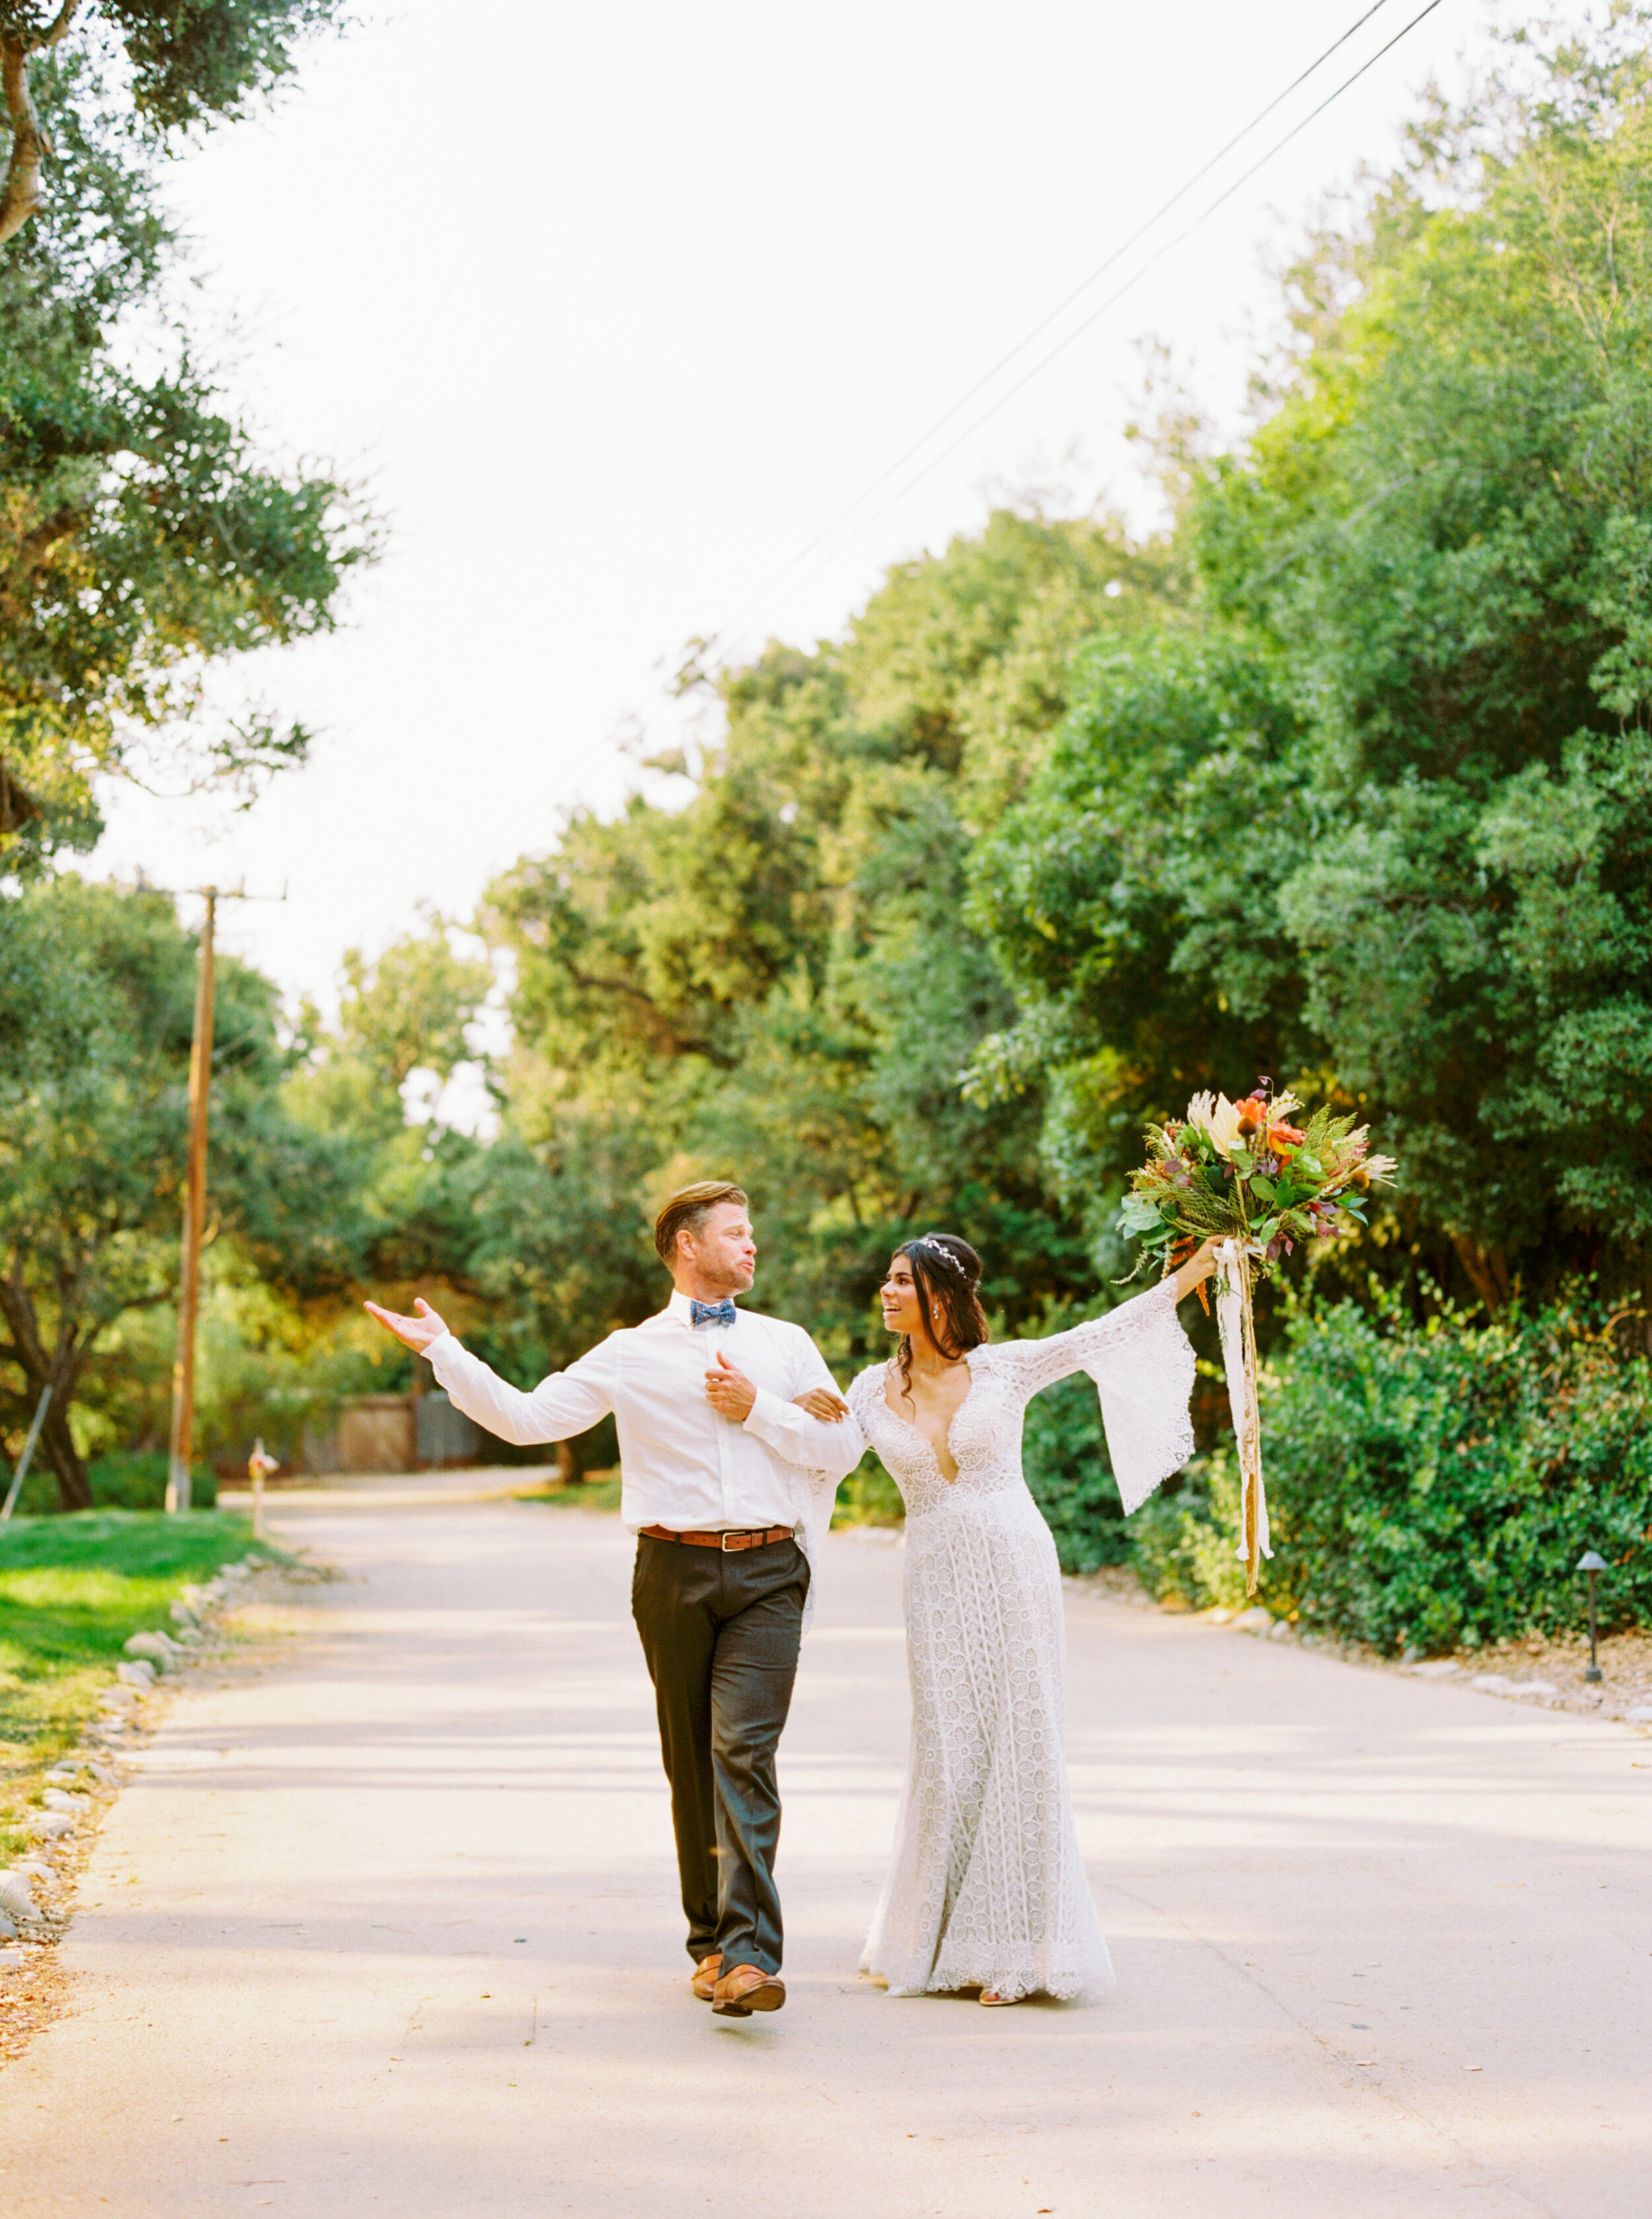 Sarahi Hadden - An Earthy Summer Boho Inspired Wedding with Sunset Hues at Gardener Ranch-32.jpg